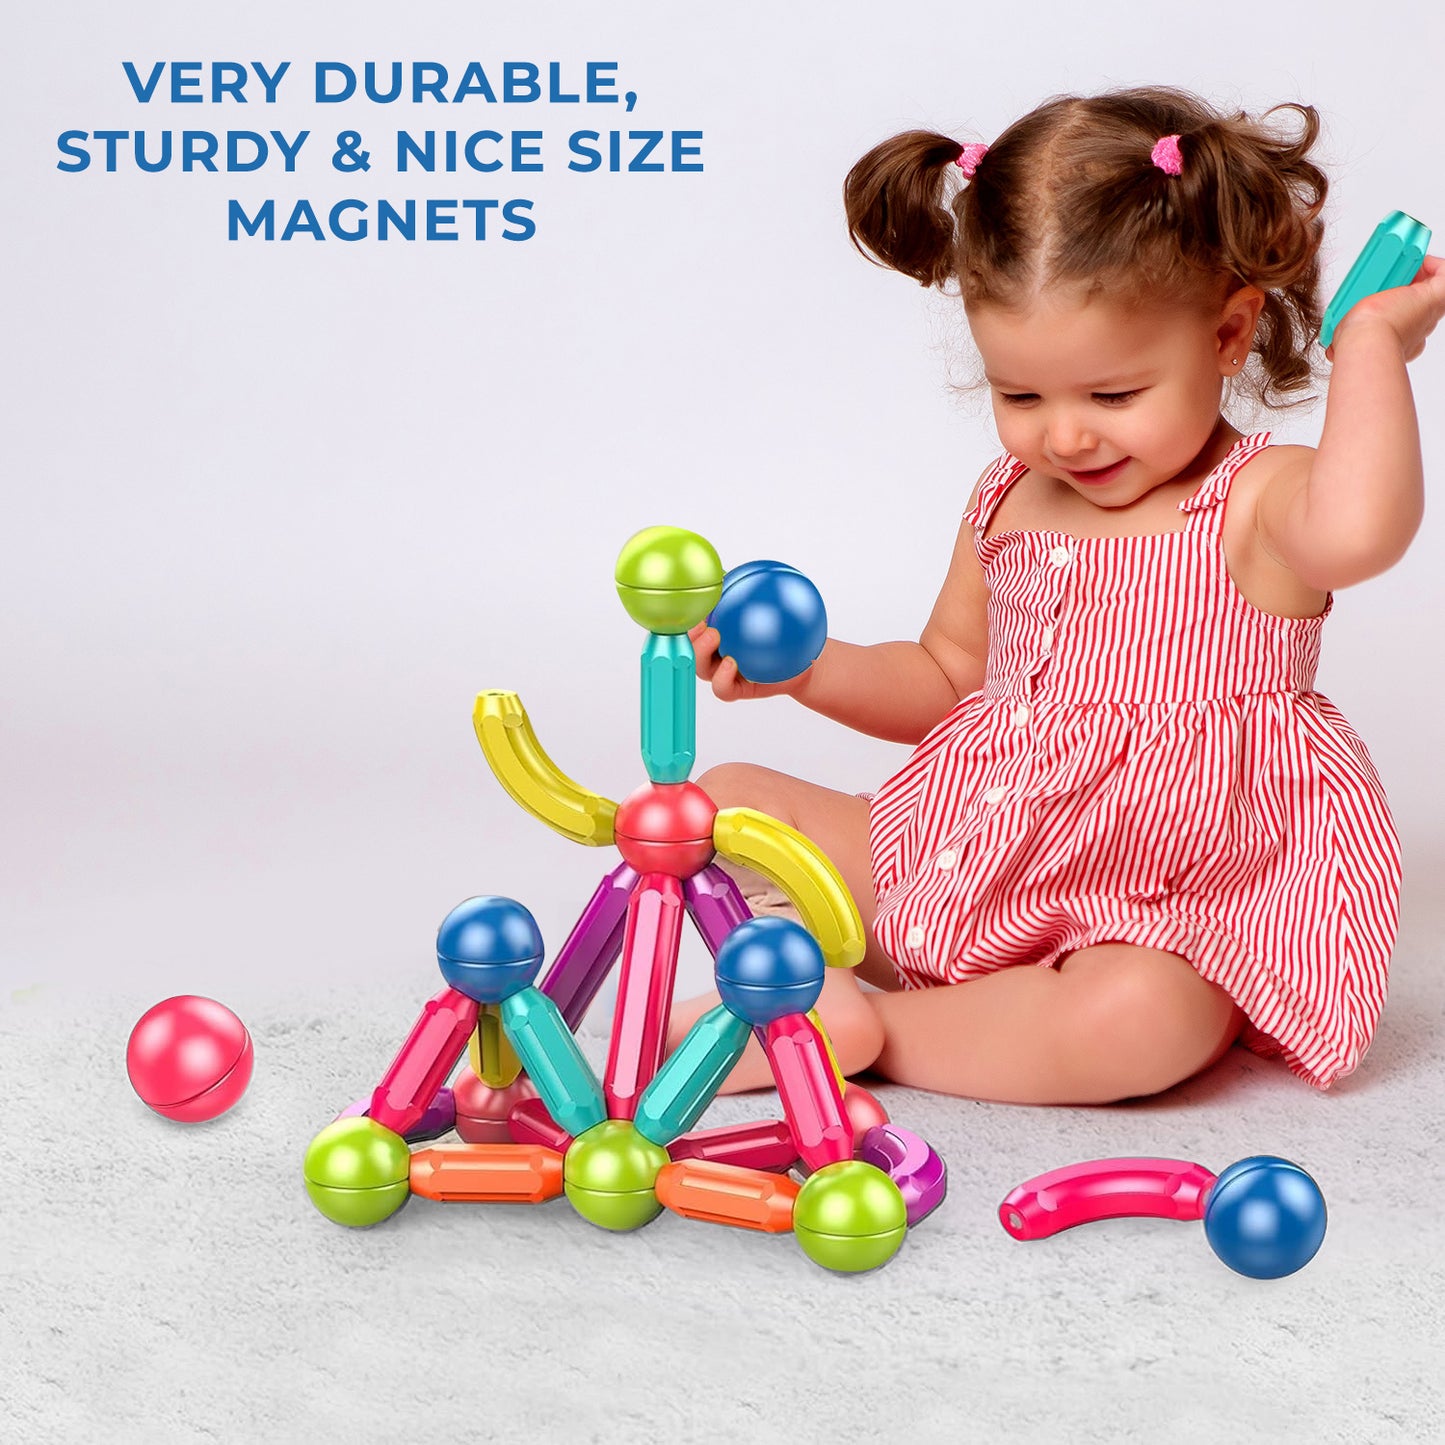 25pcs Educational Magnetic Building Blocks Kids Learning Toys Children Gift Play